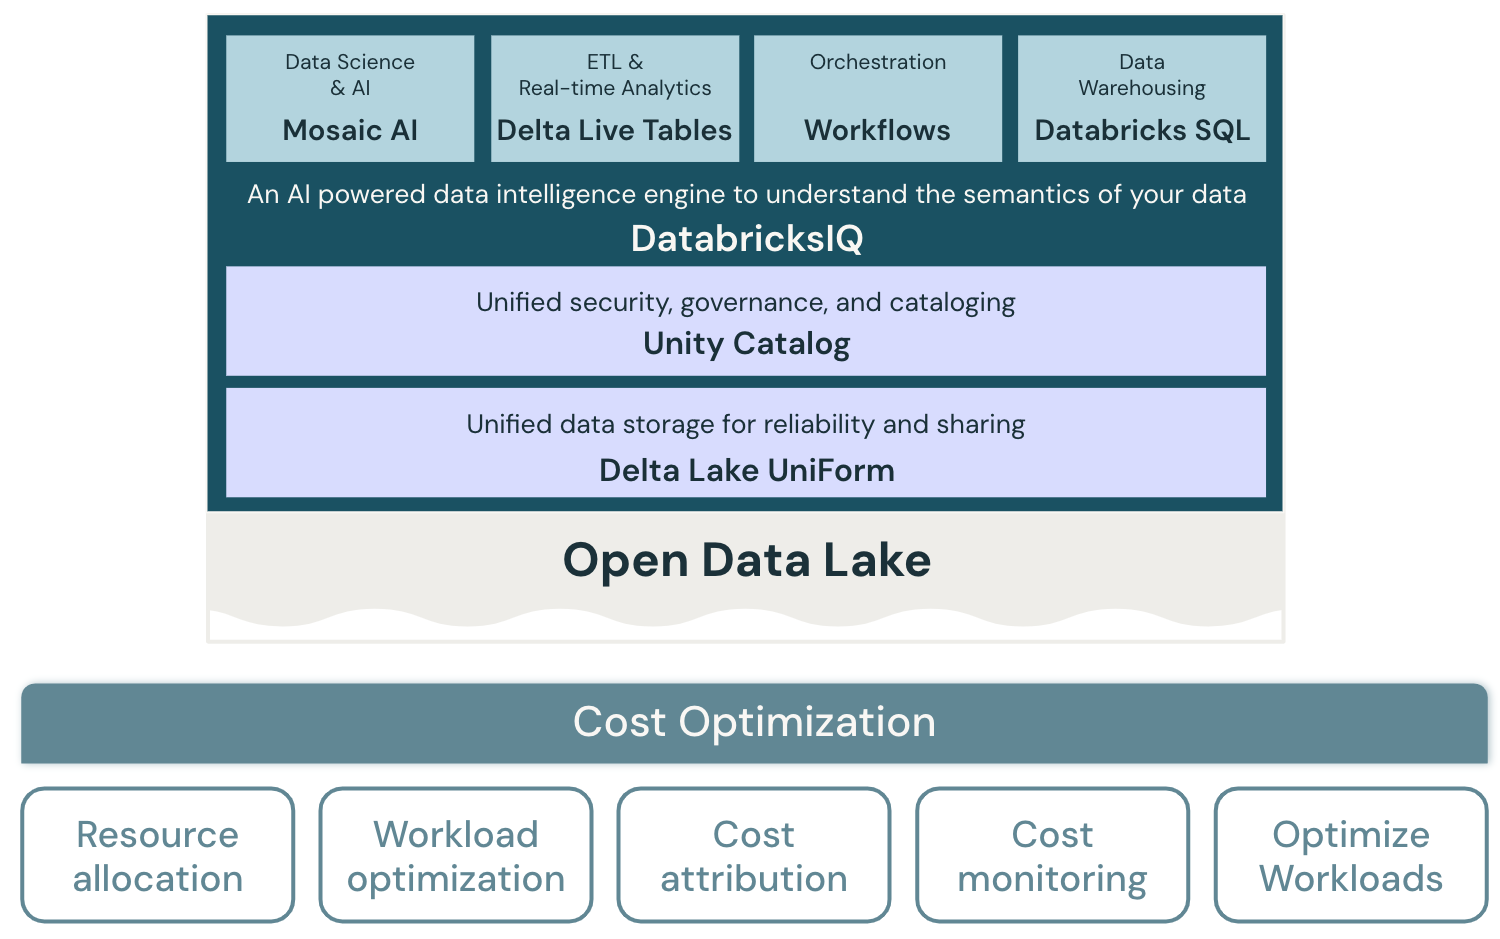 Cost optimization lakehouse architecture diagram for Databricks.